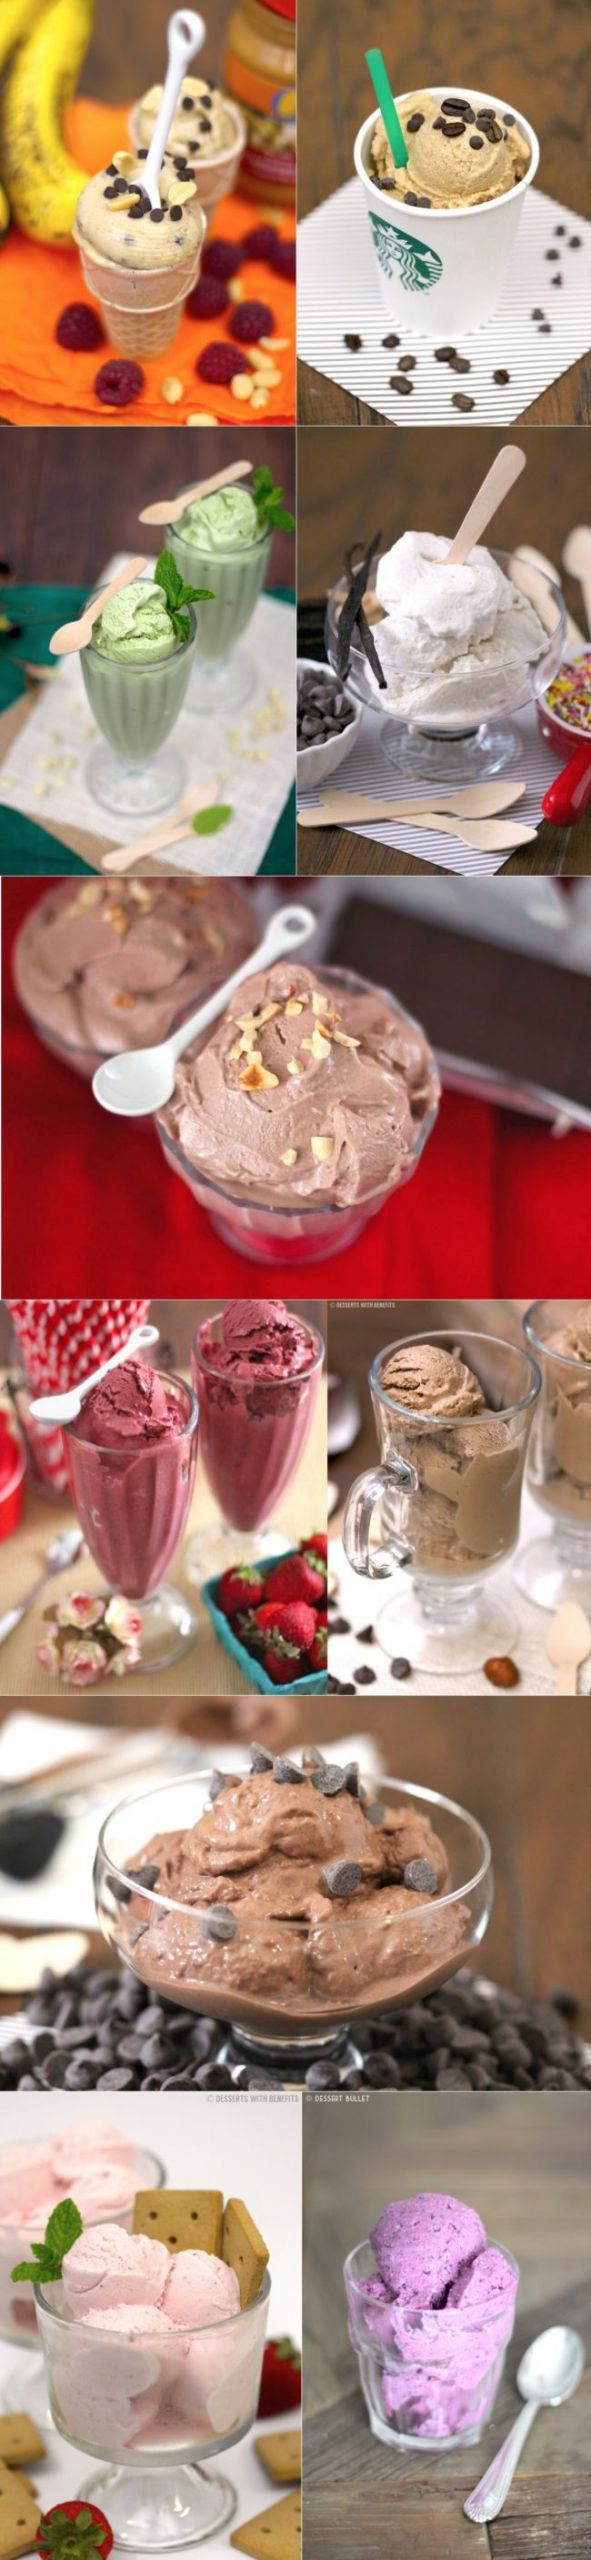 Low Calorie Ice Cream Recipes For Ice Cream Maker
 Healthy Ice Cream Recipes